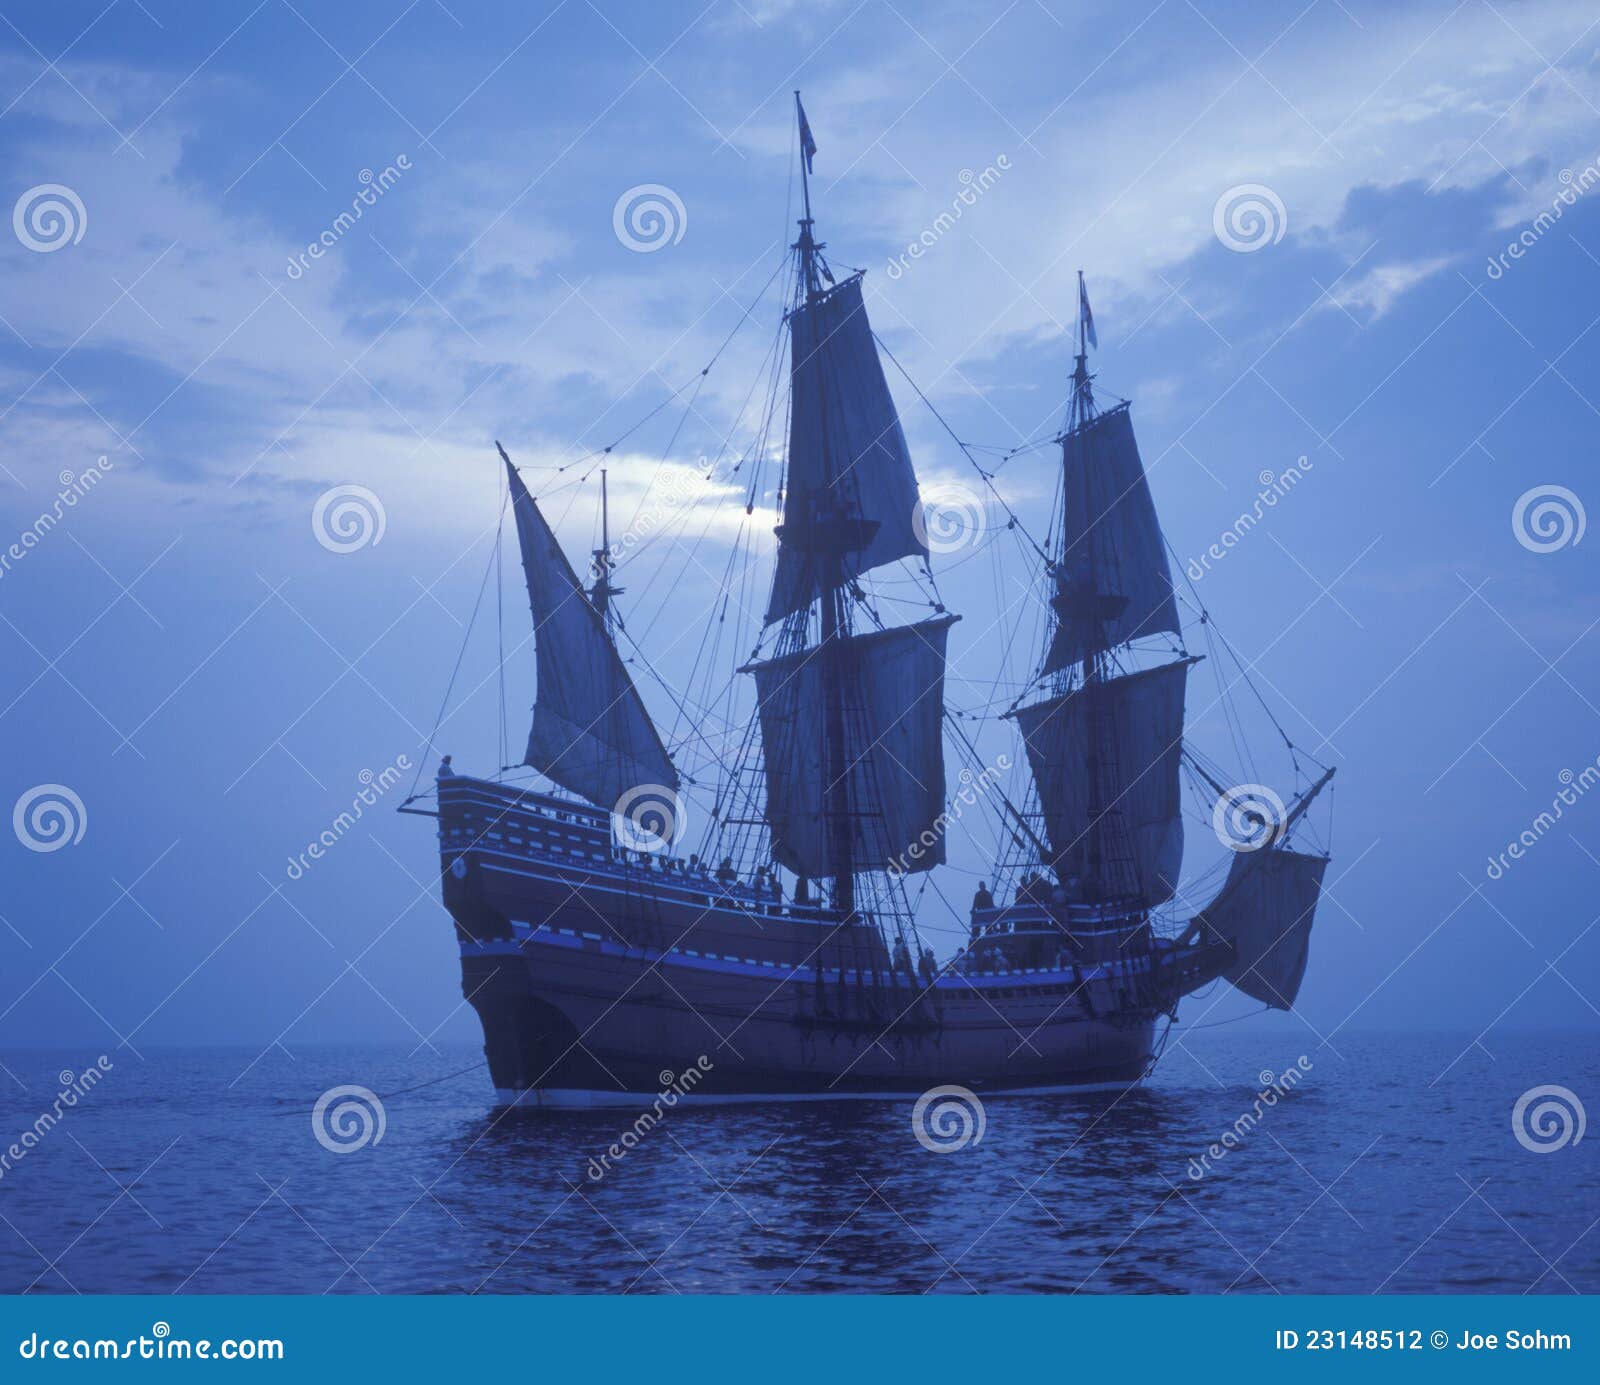 replica of mayflower ship